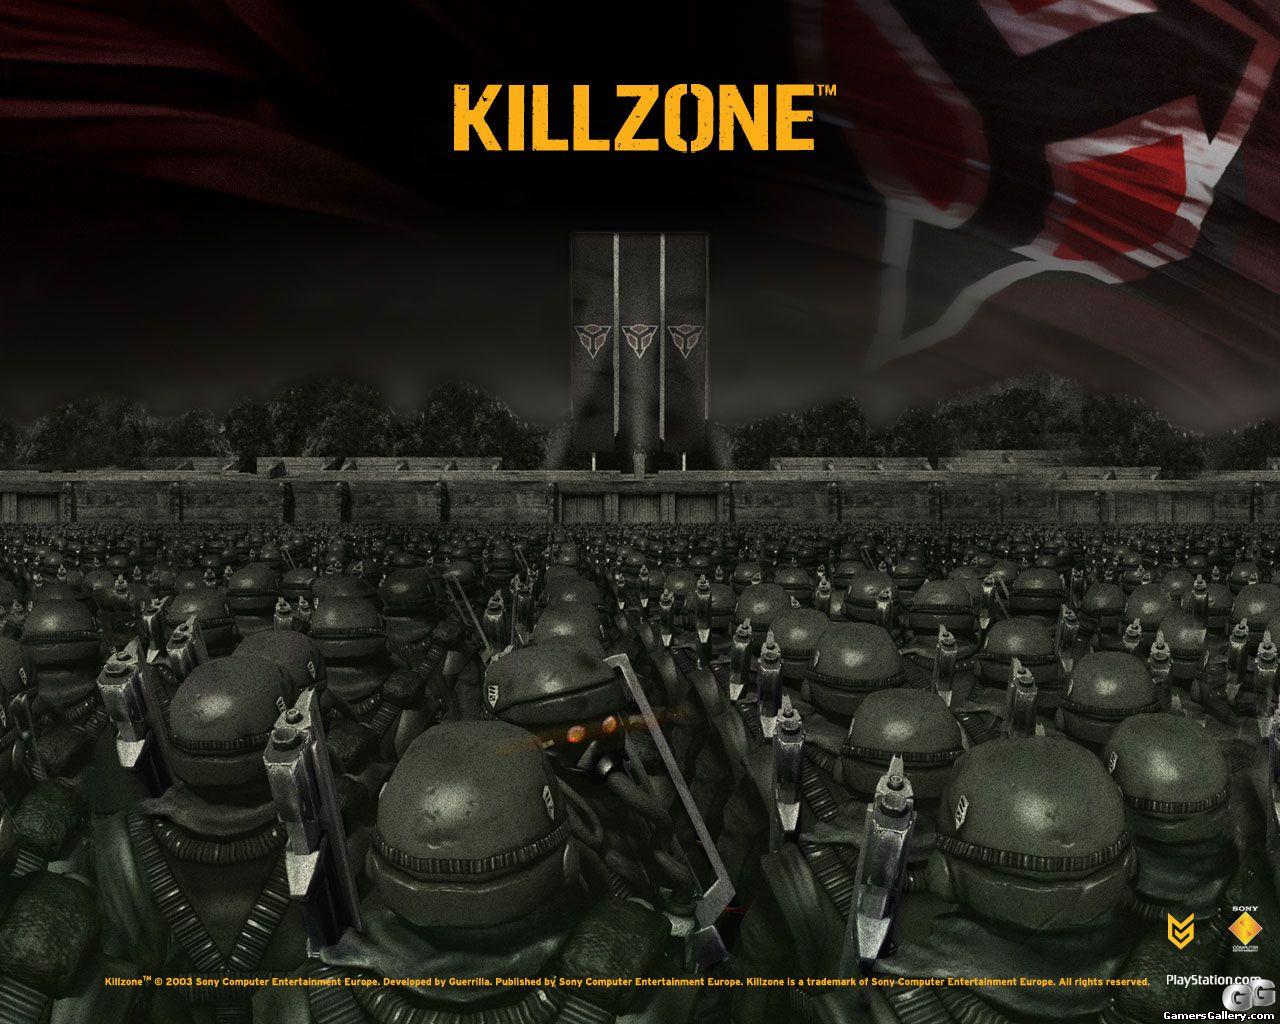 Killzone Ps3 Rumors Amp Facts Meltdown What We Ve Heard So